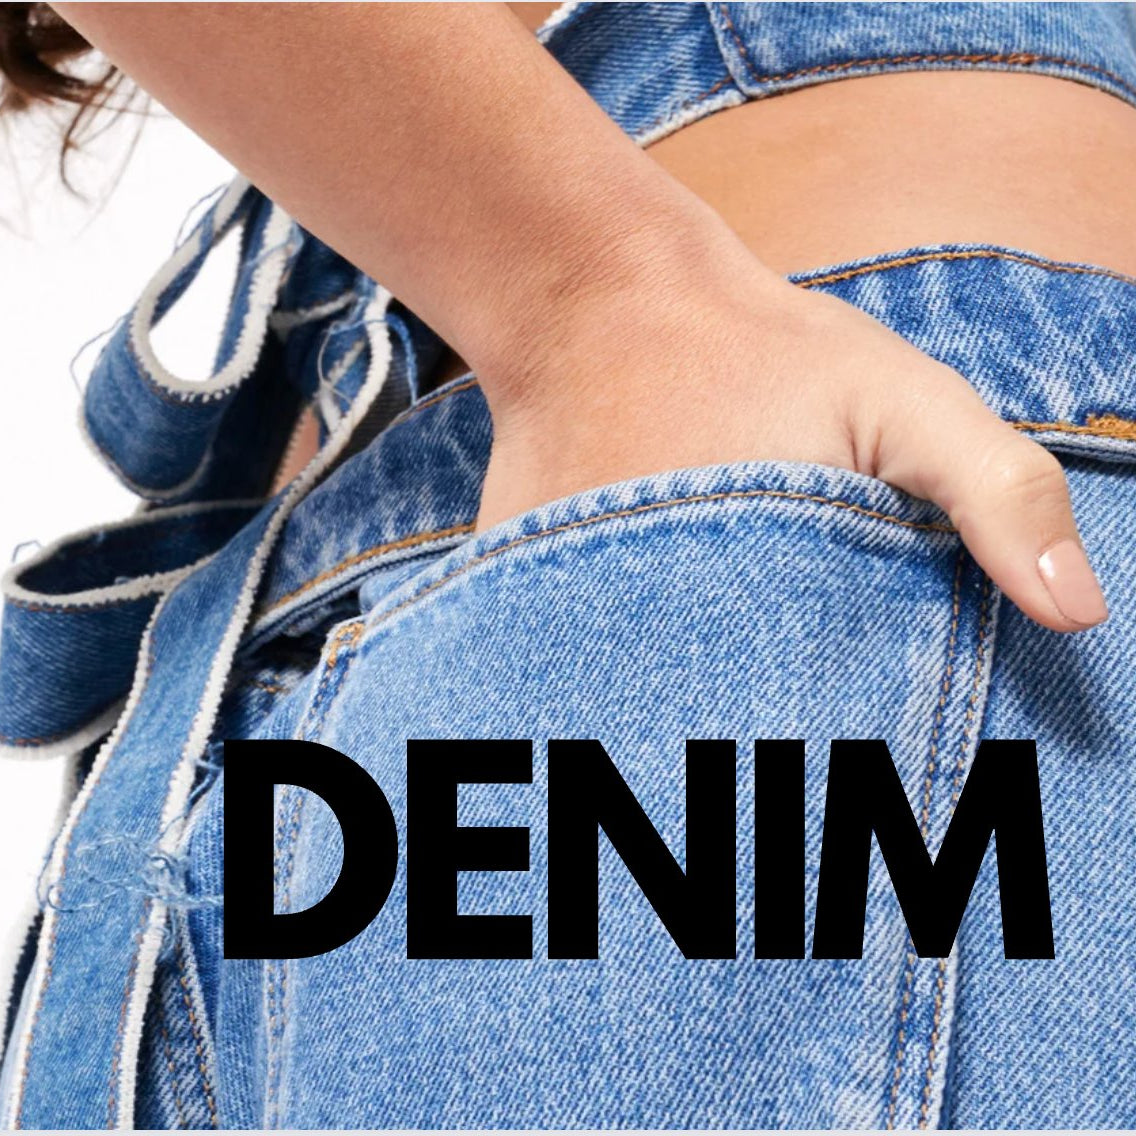 Jeans & Denim by Guy Christopher - Guy Christopher 